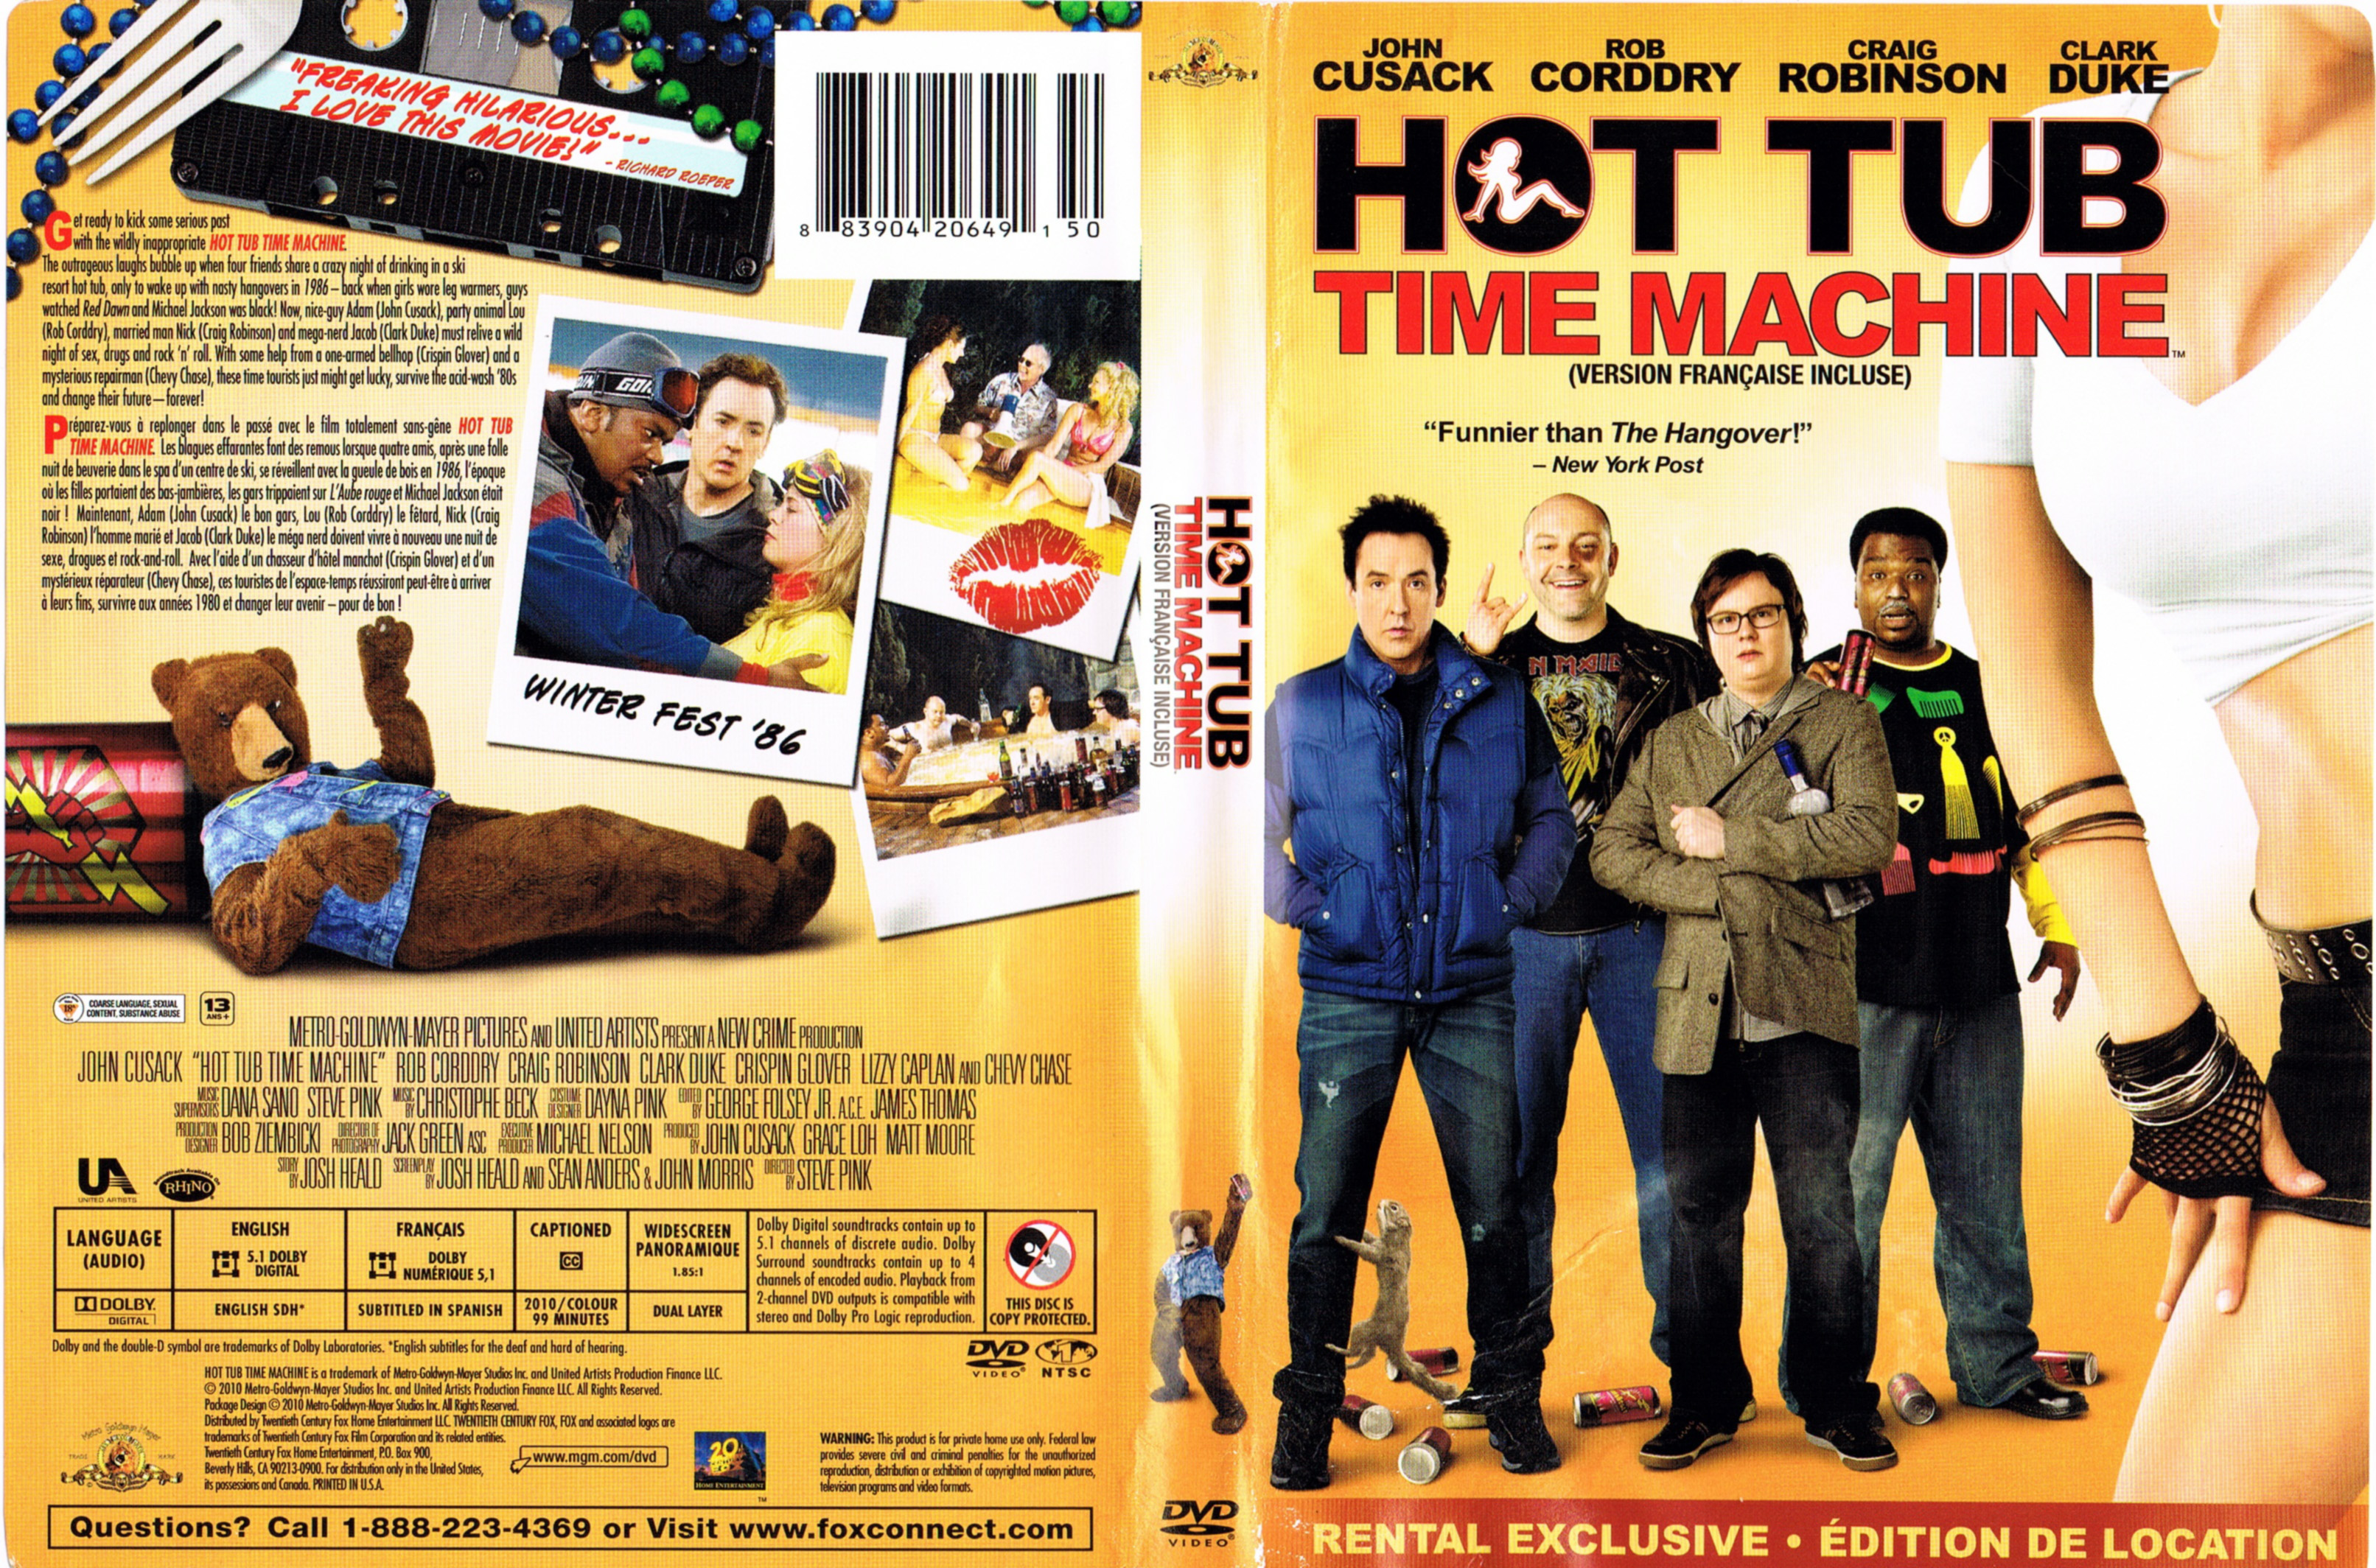 Jaquette DVD Hot tub time machine (Canadienne)